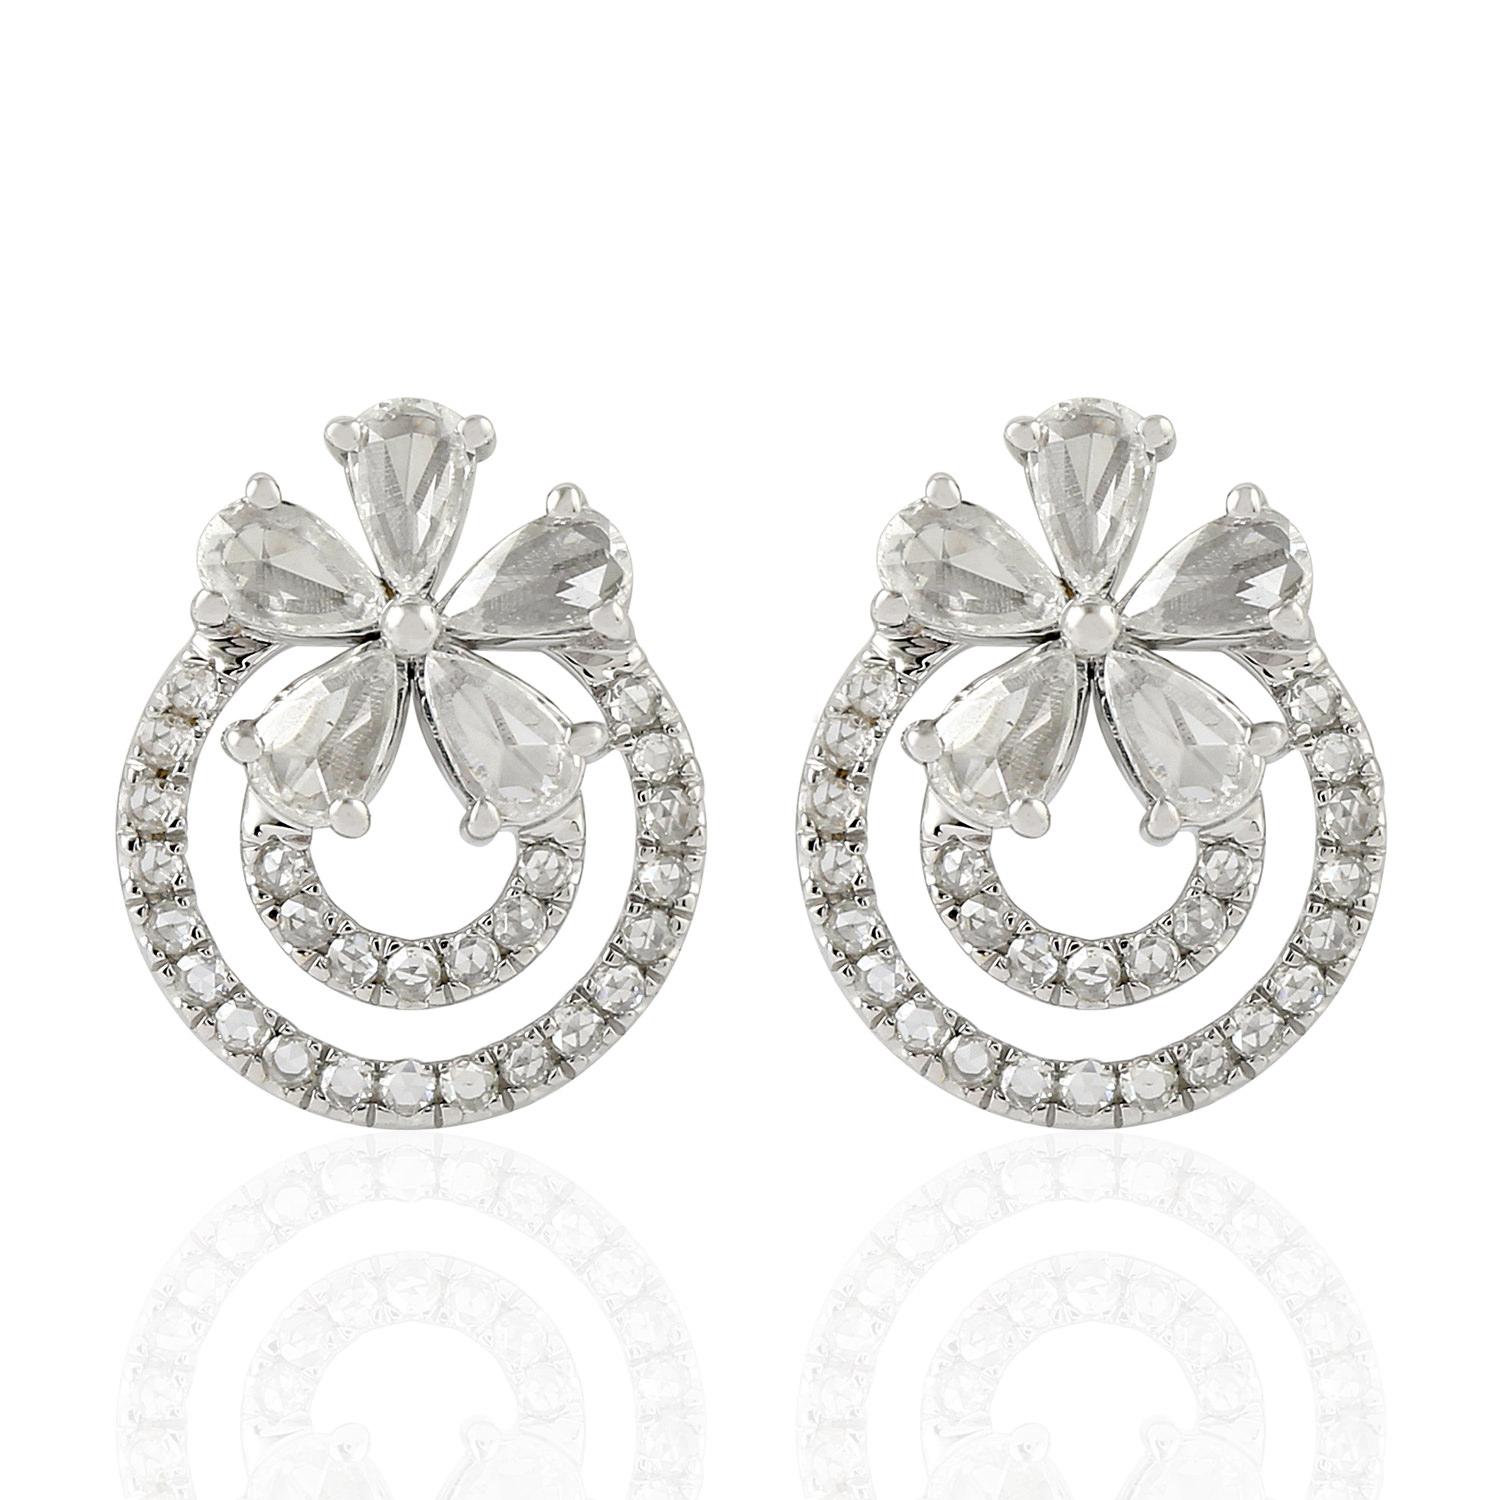 Mixed Cut Swirl & Flower Rose Cut Diamonds Stud Earrings Made In 18k White Gold For Sale